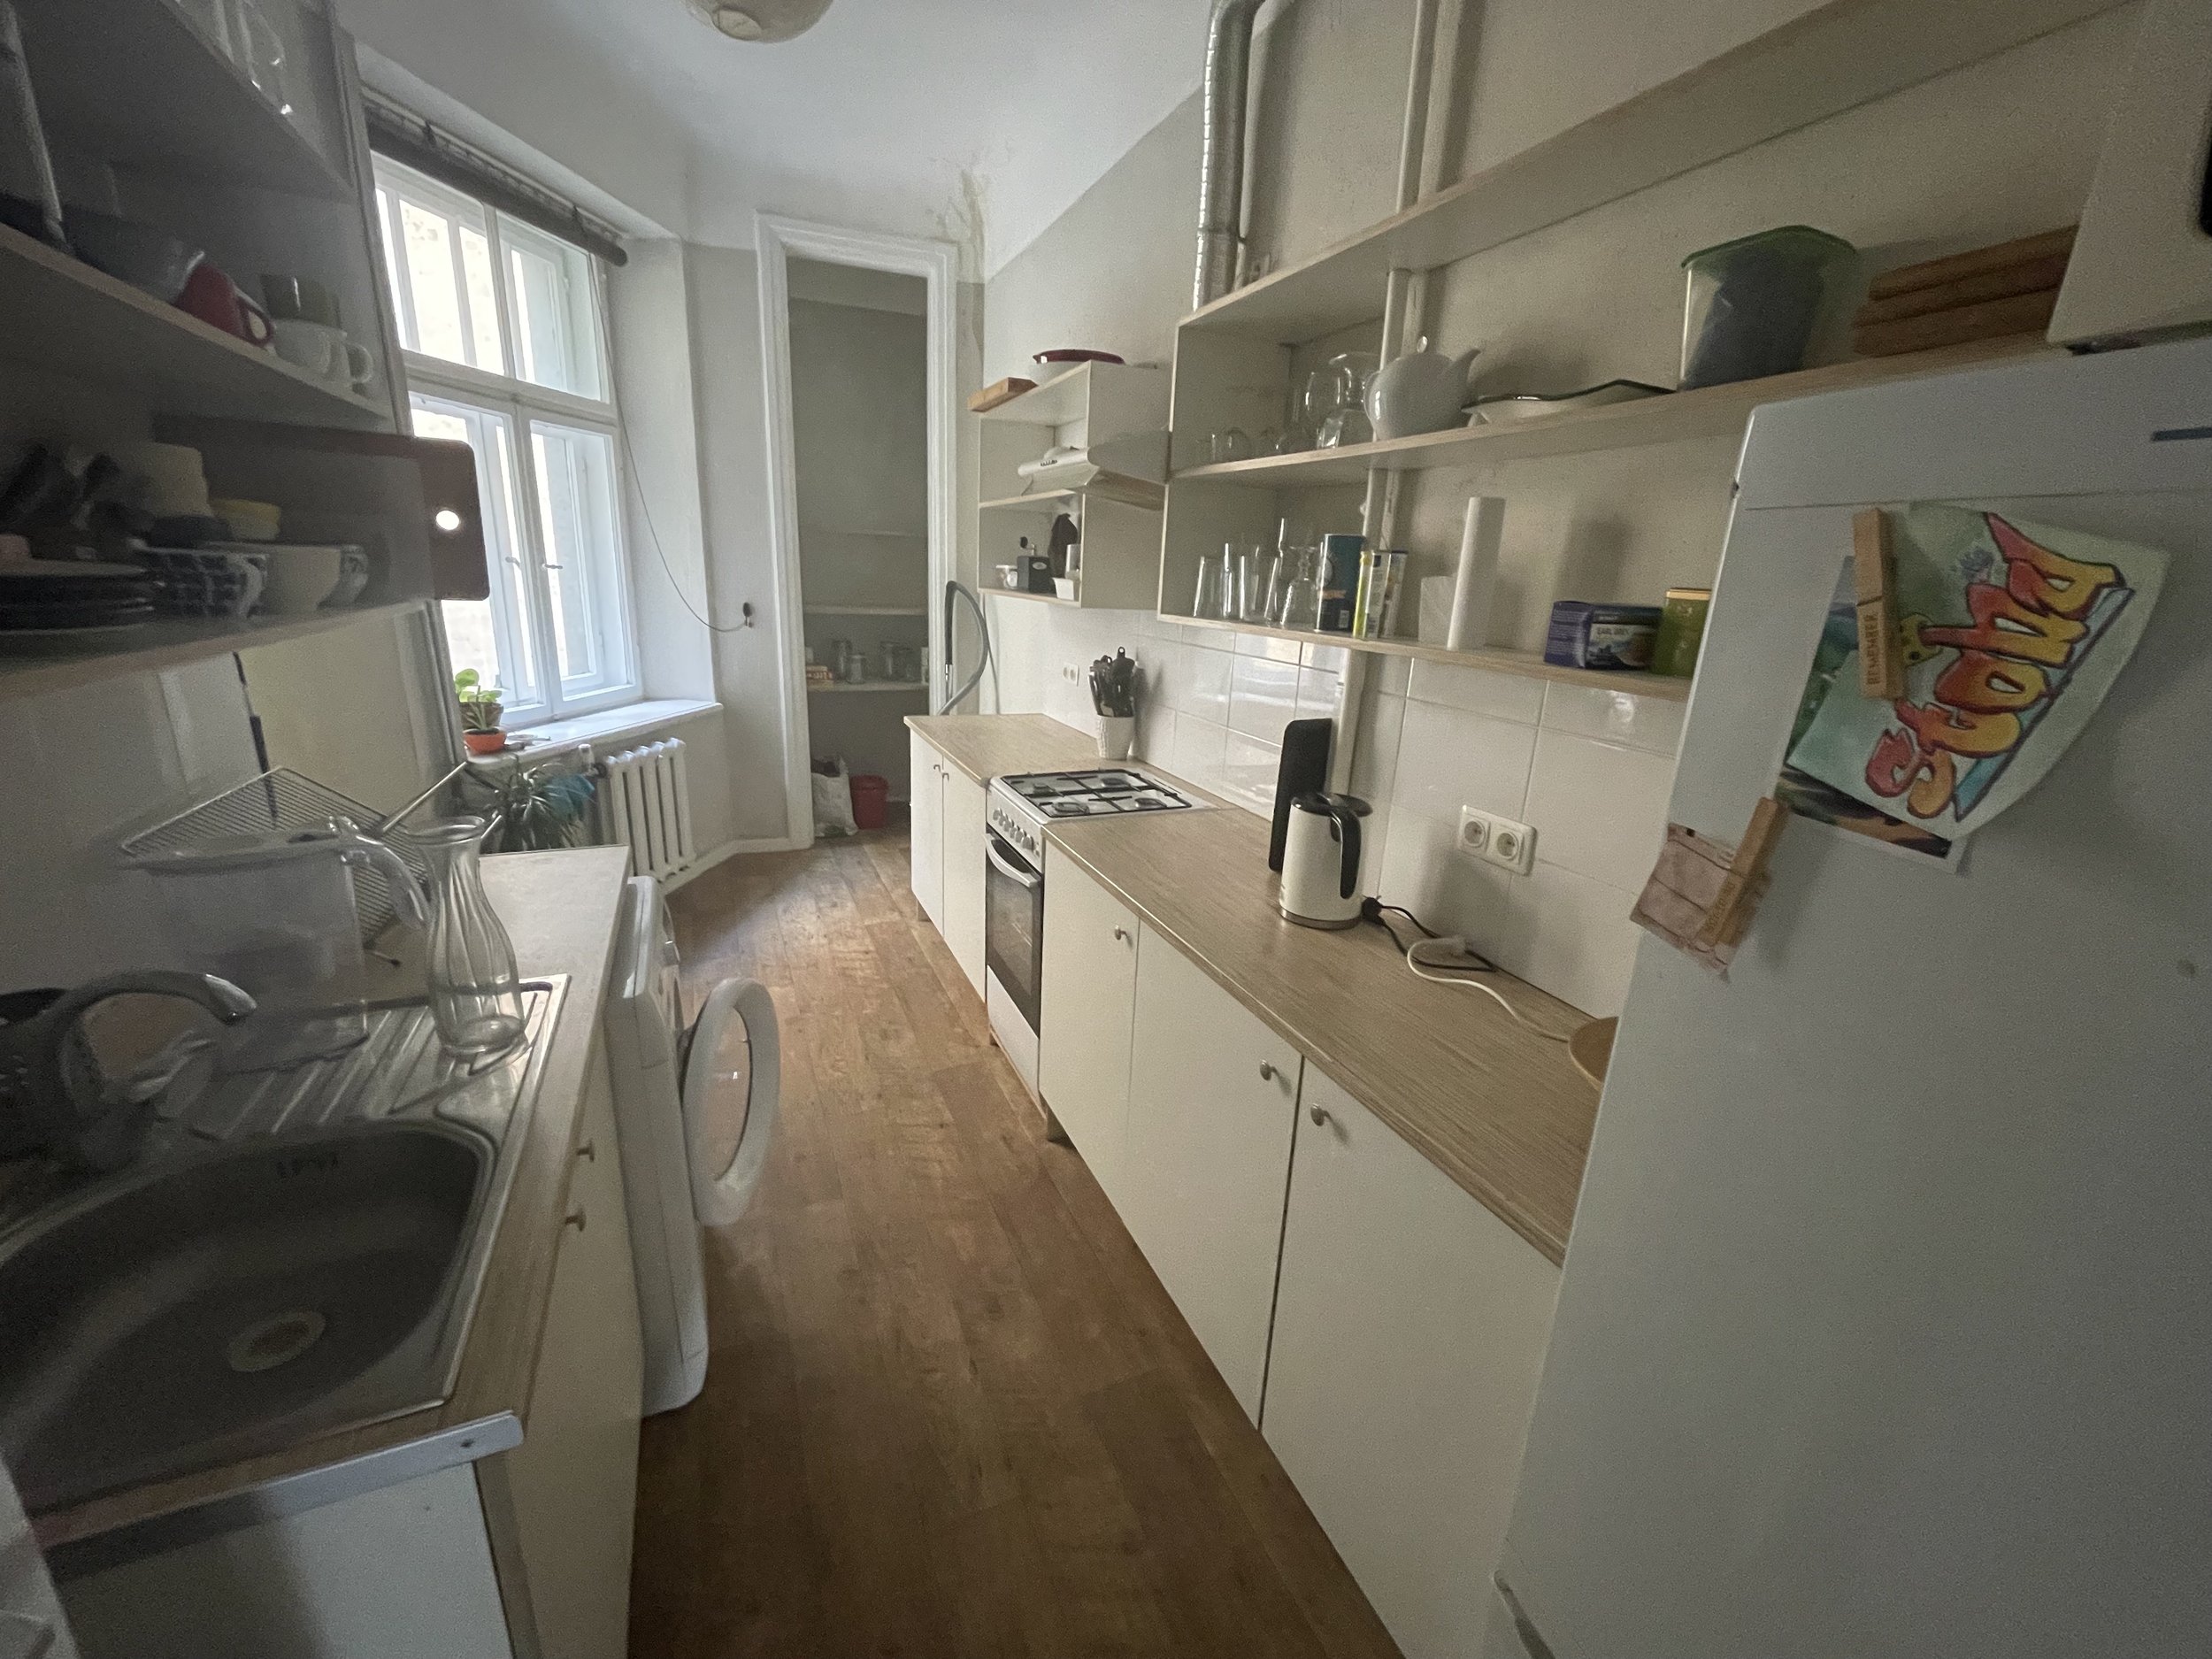 Apartment 22, kitchen